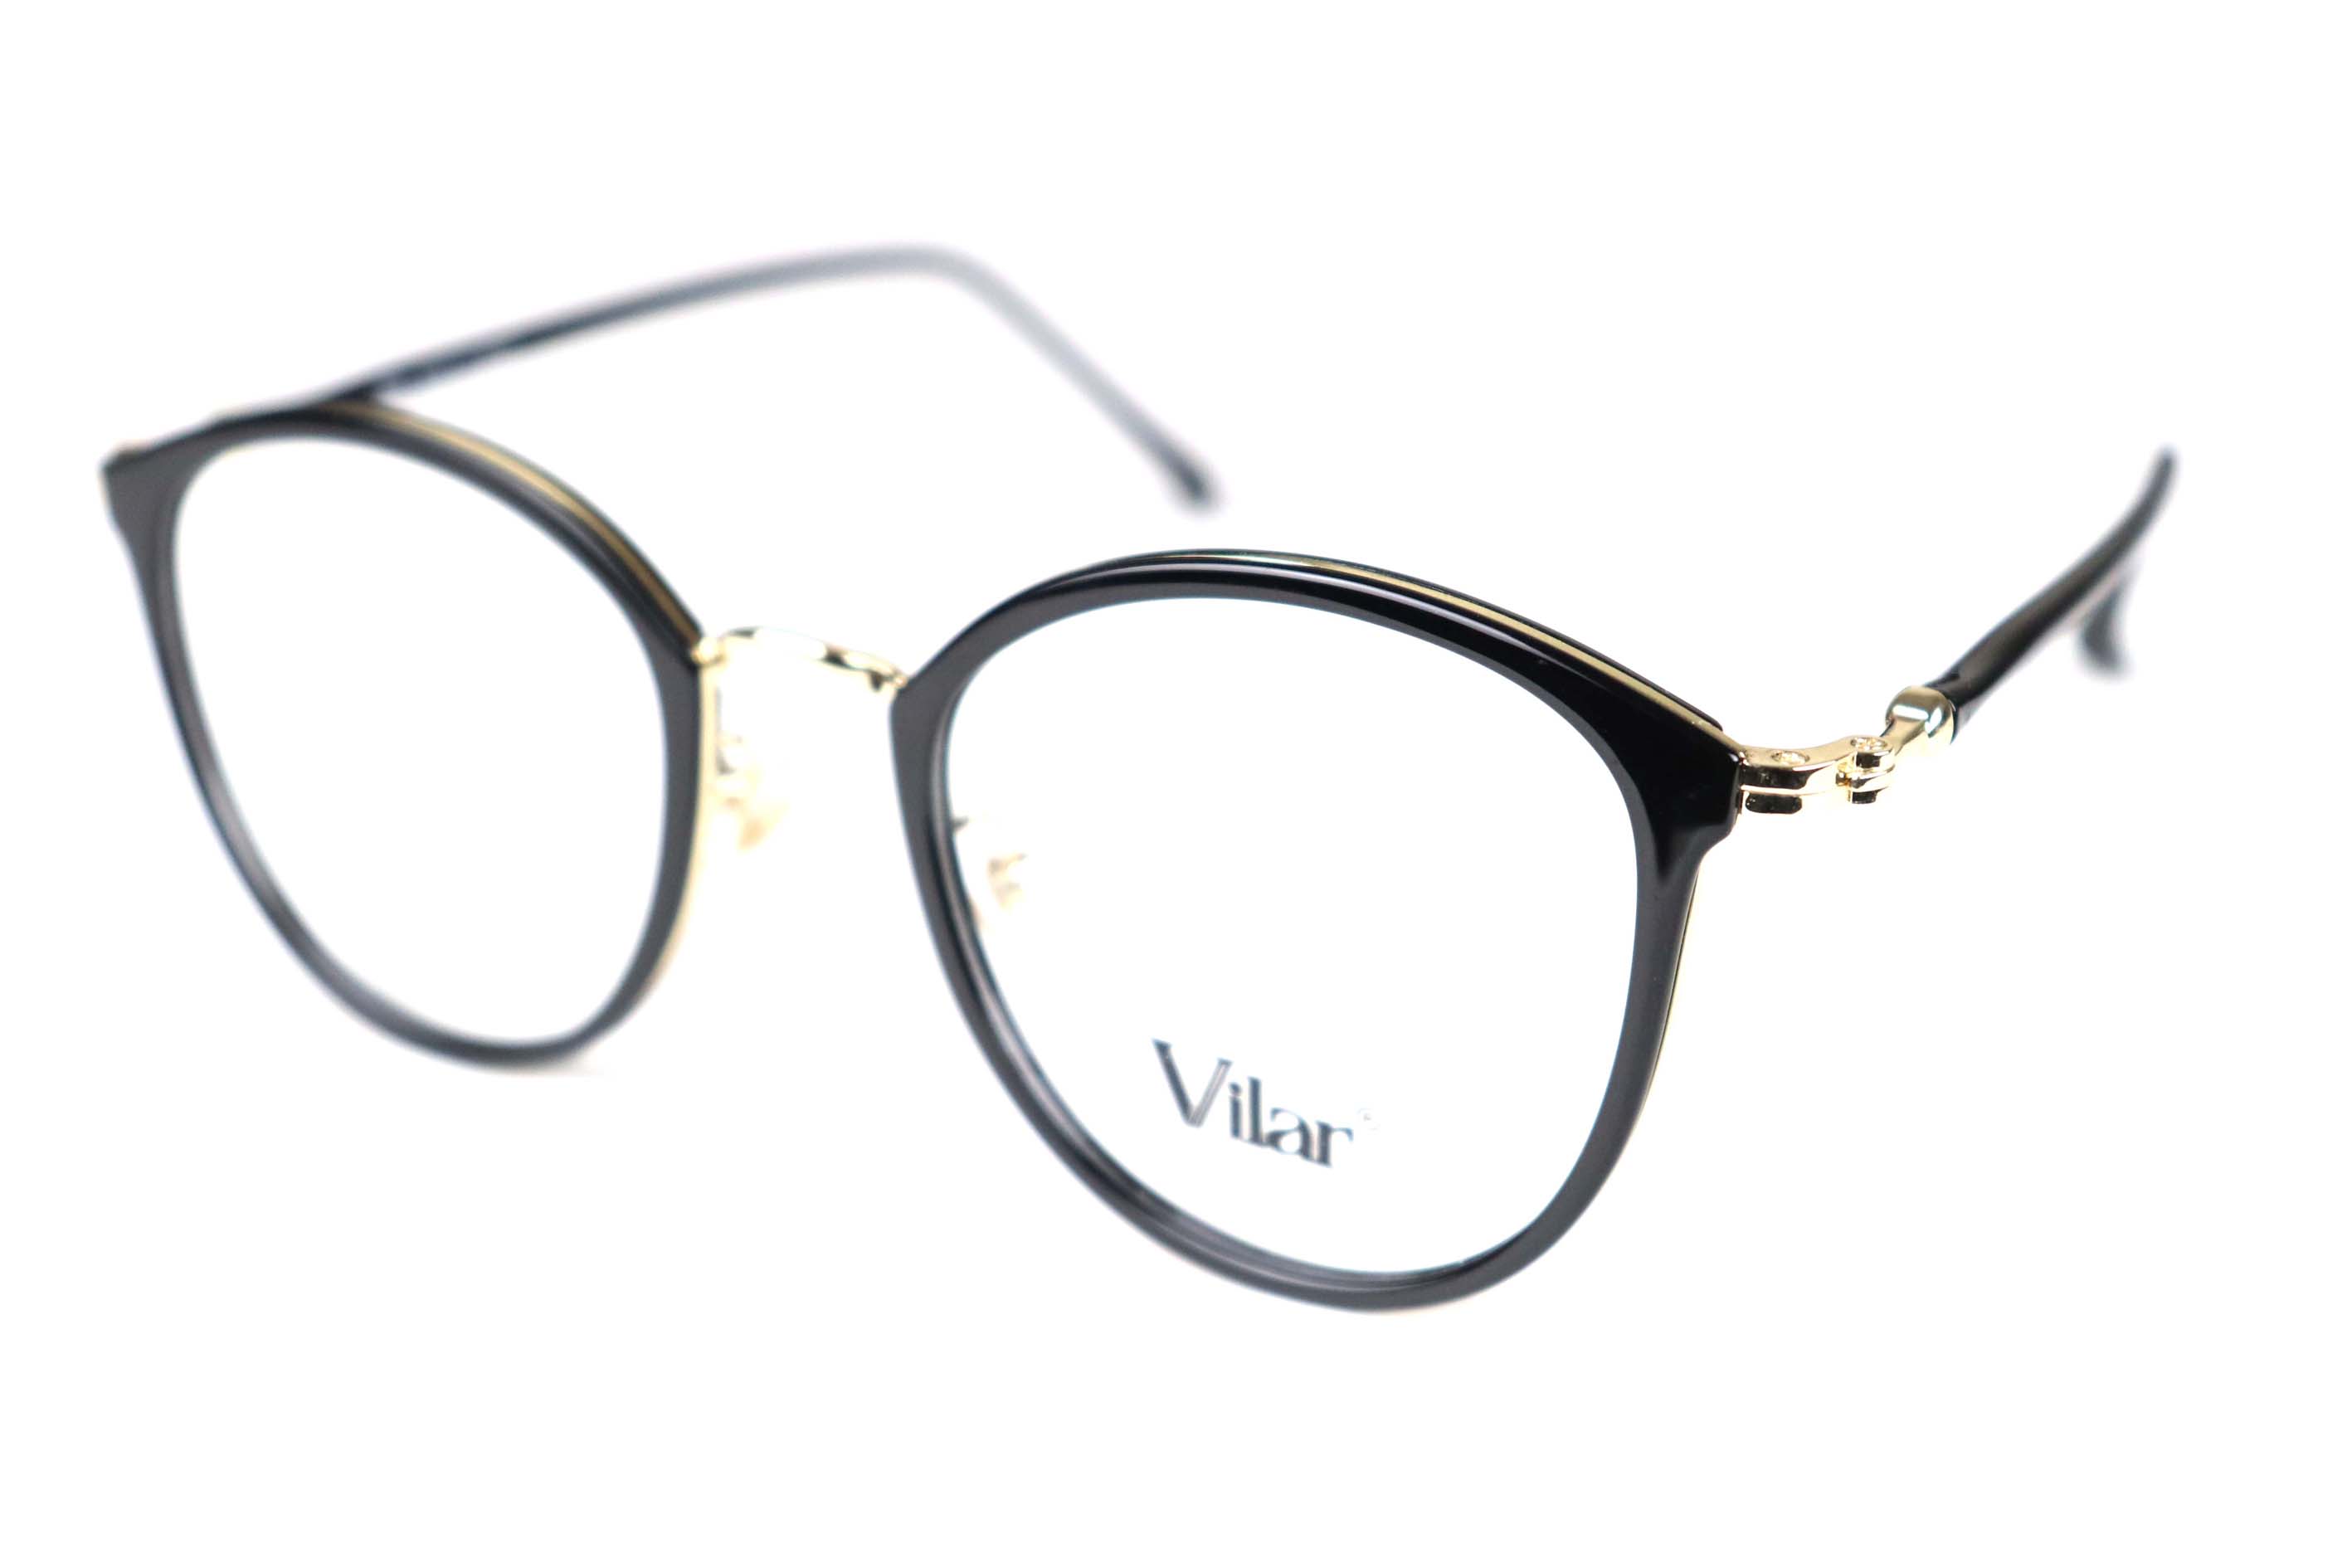 Vilar Eyeglasses- M2053-C1-51-22-146